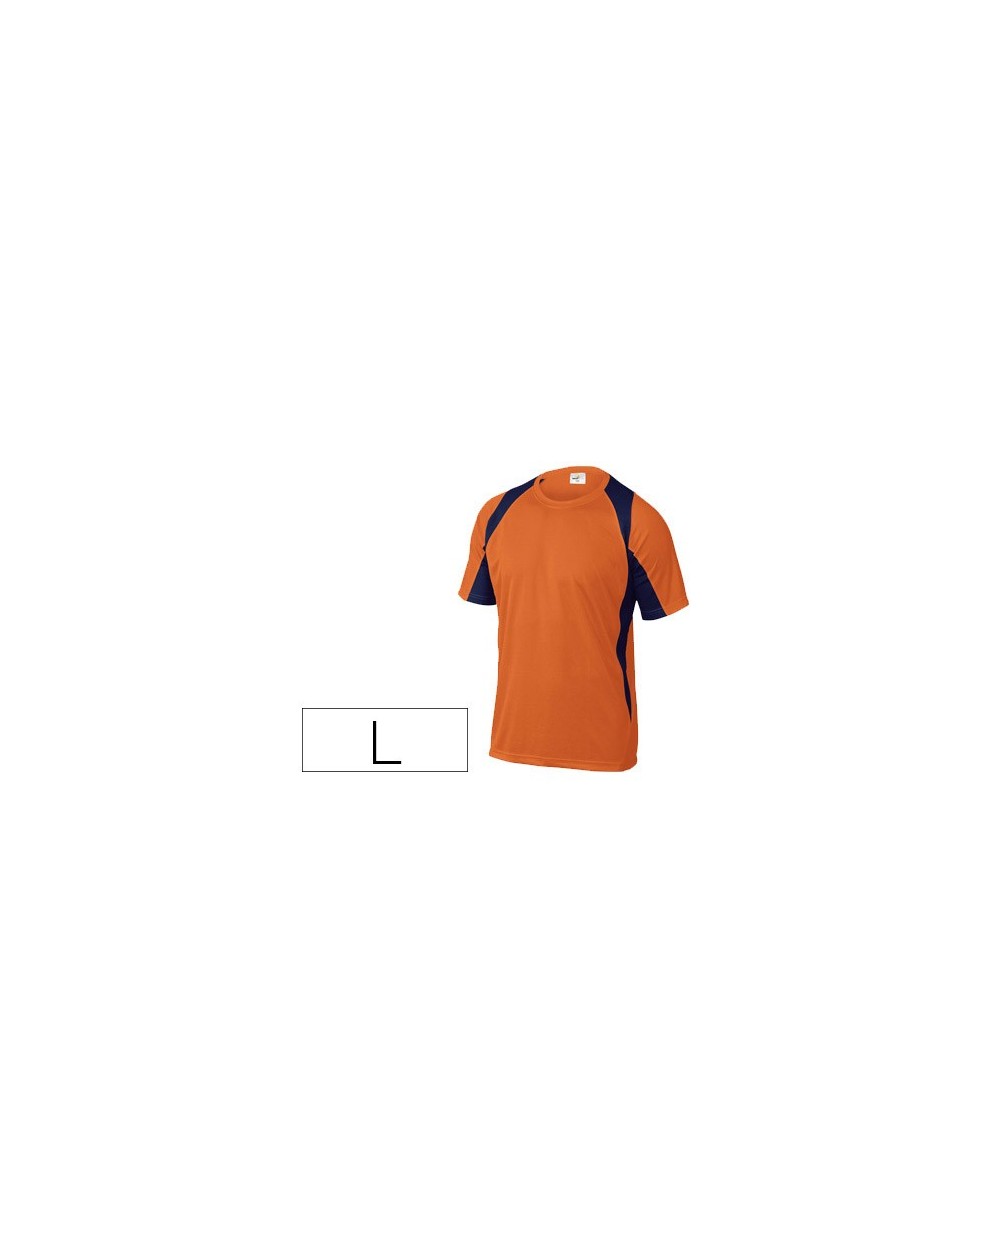 Camiseta deltaplus poliester manga corta cuello redondo tratamiento secado rapido color naranja marino talla l